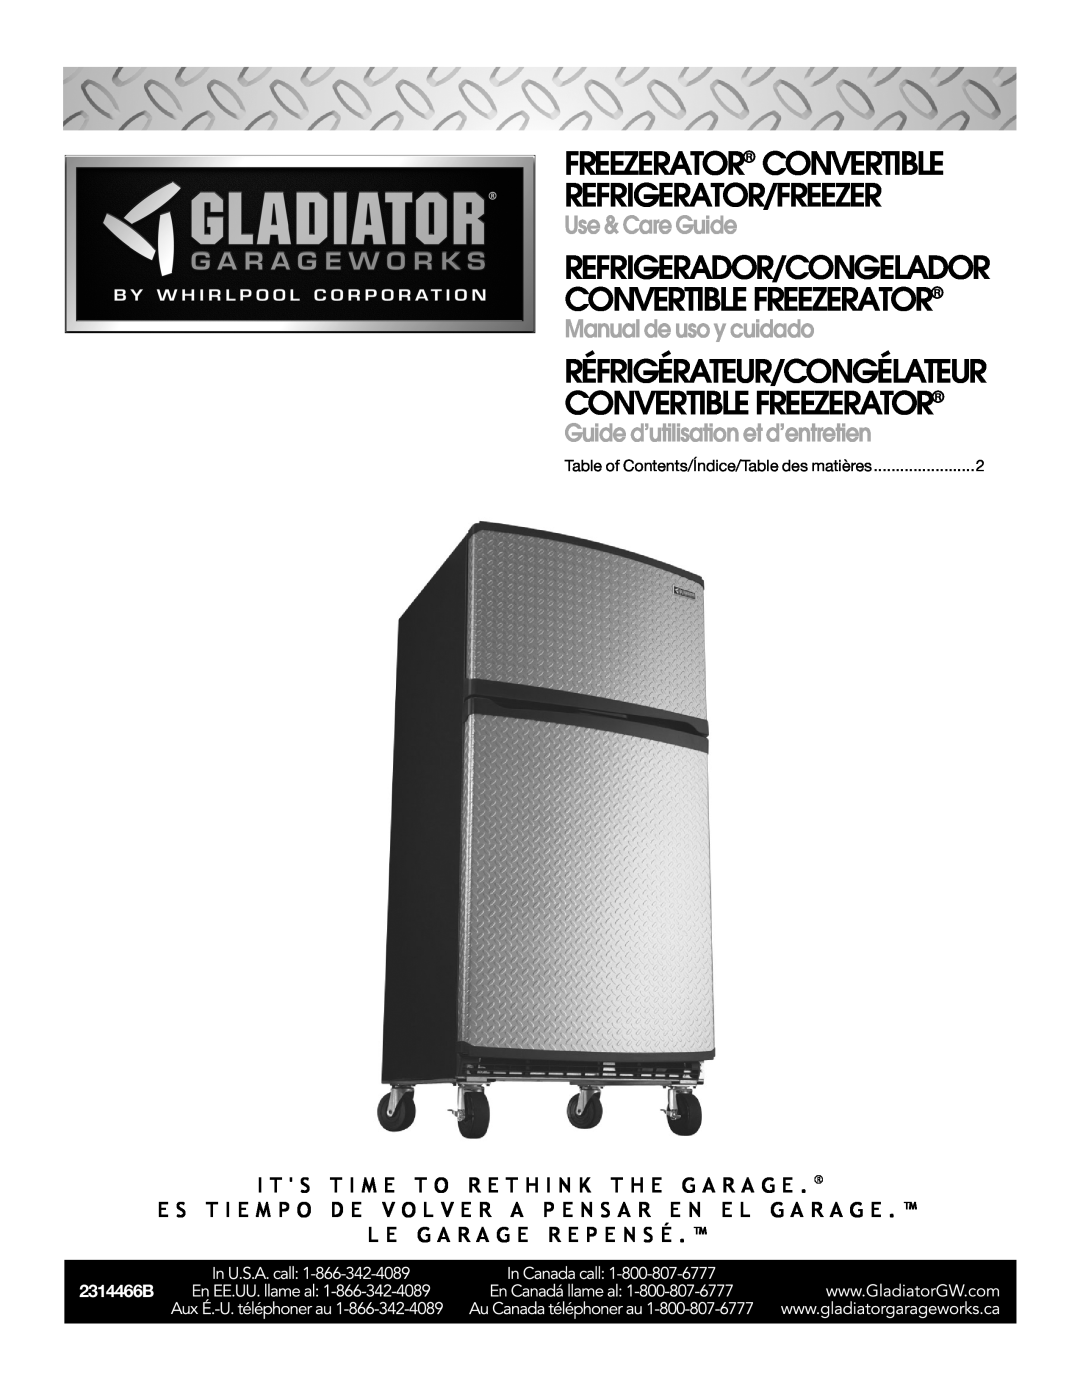 Whirlpool GAFZ21XXRK01 manual Freezerator Convertible Refrigerator/Freezer, Use & Care Guide, Manual de uso y cuidado 